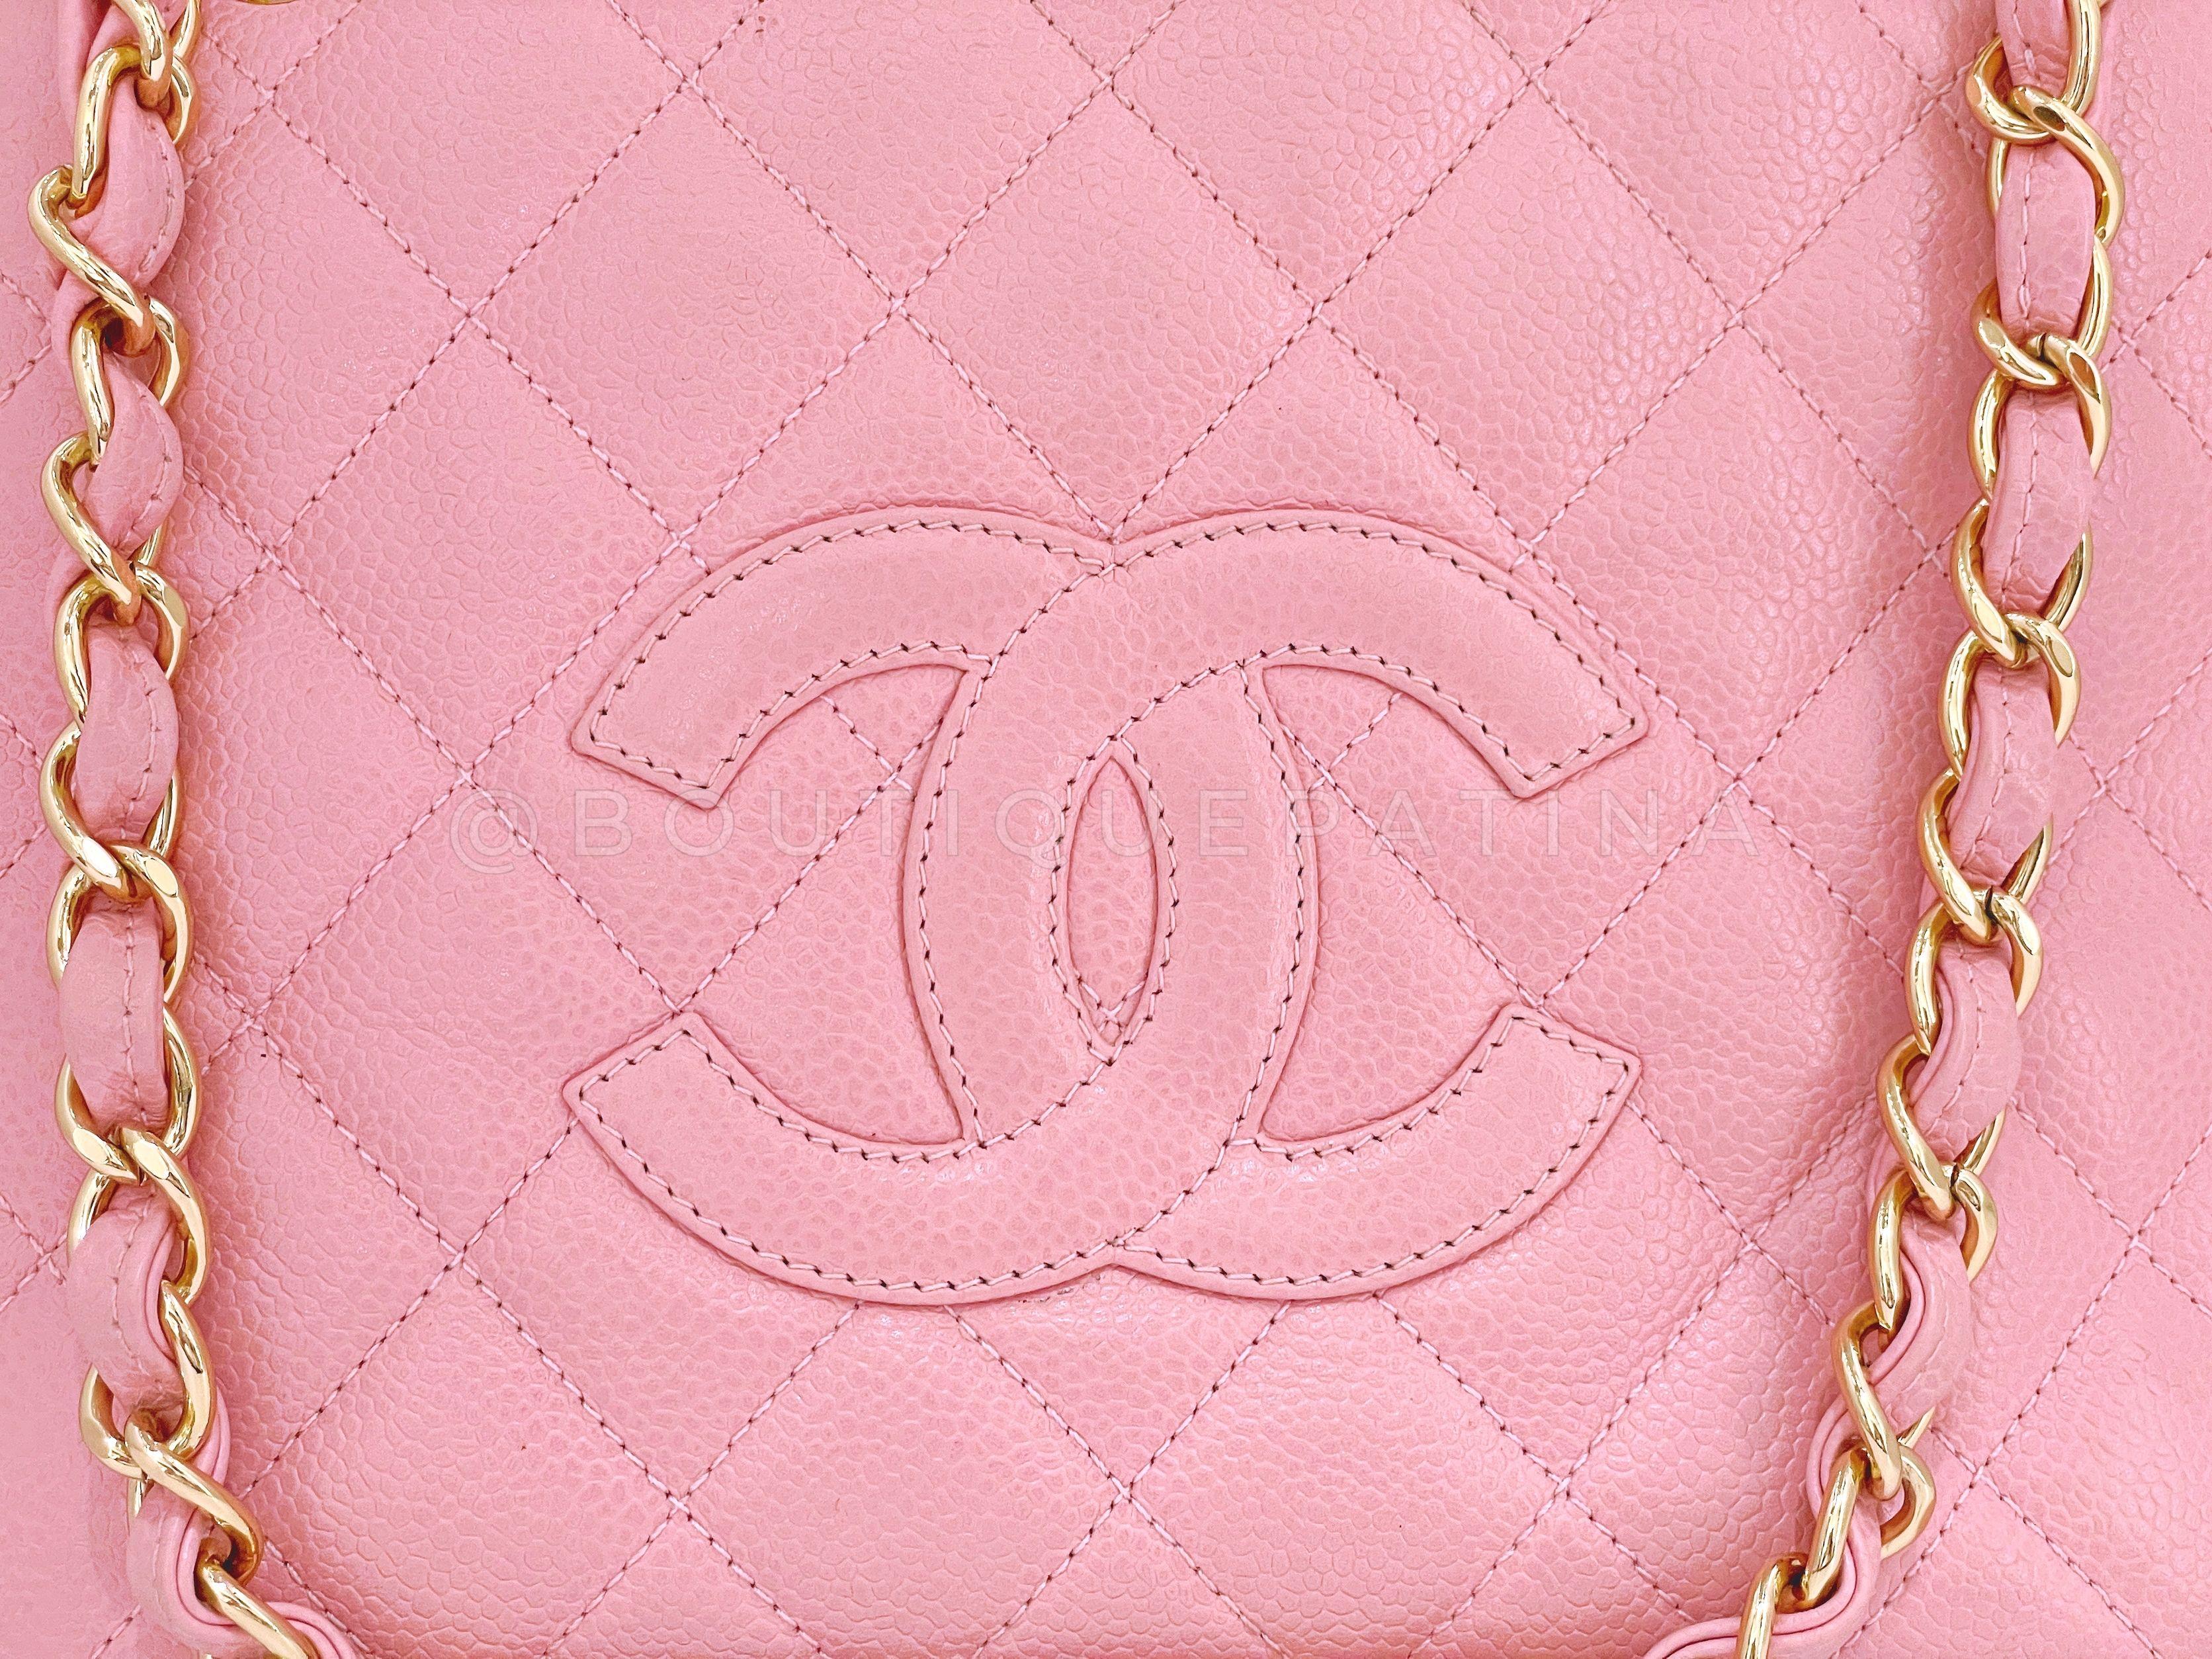 Chanel Pink Caviar Petite Timeless Shopper Tote PTT Bag 24k GHW 65400 3